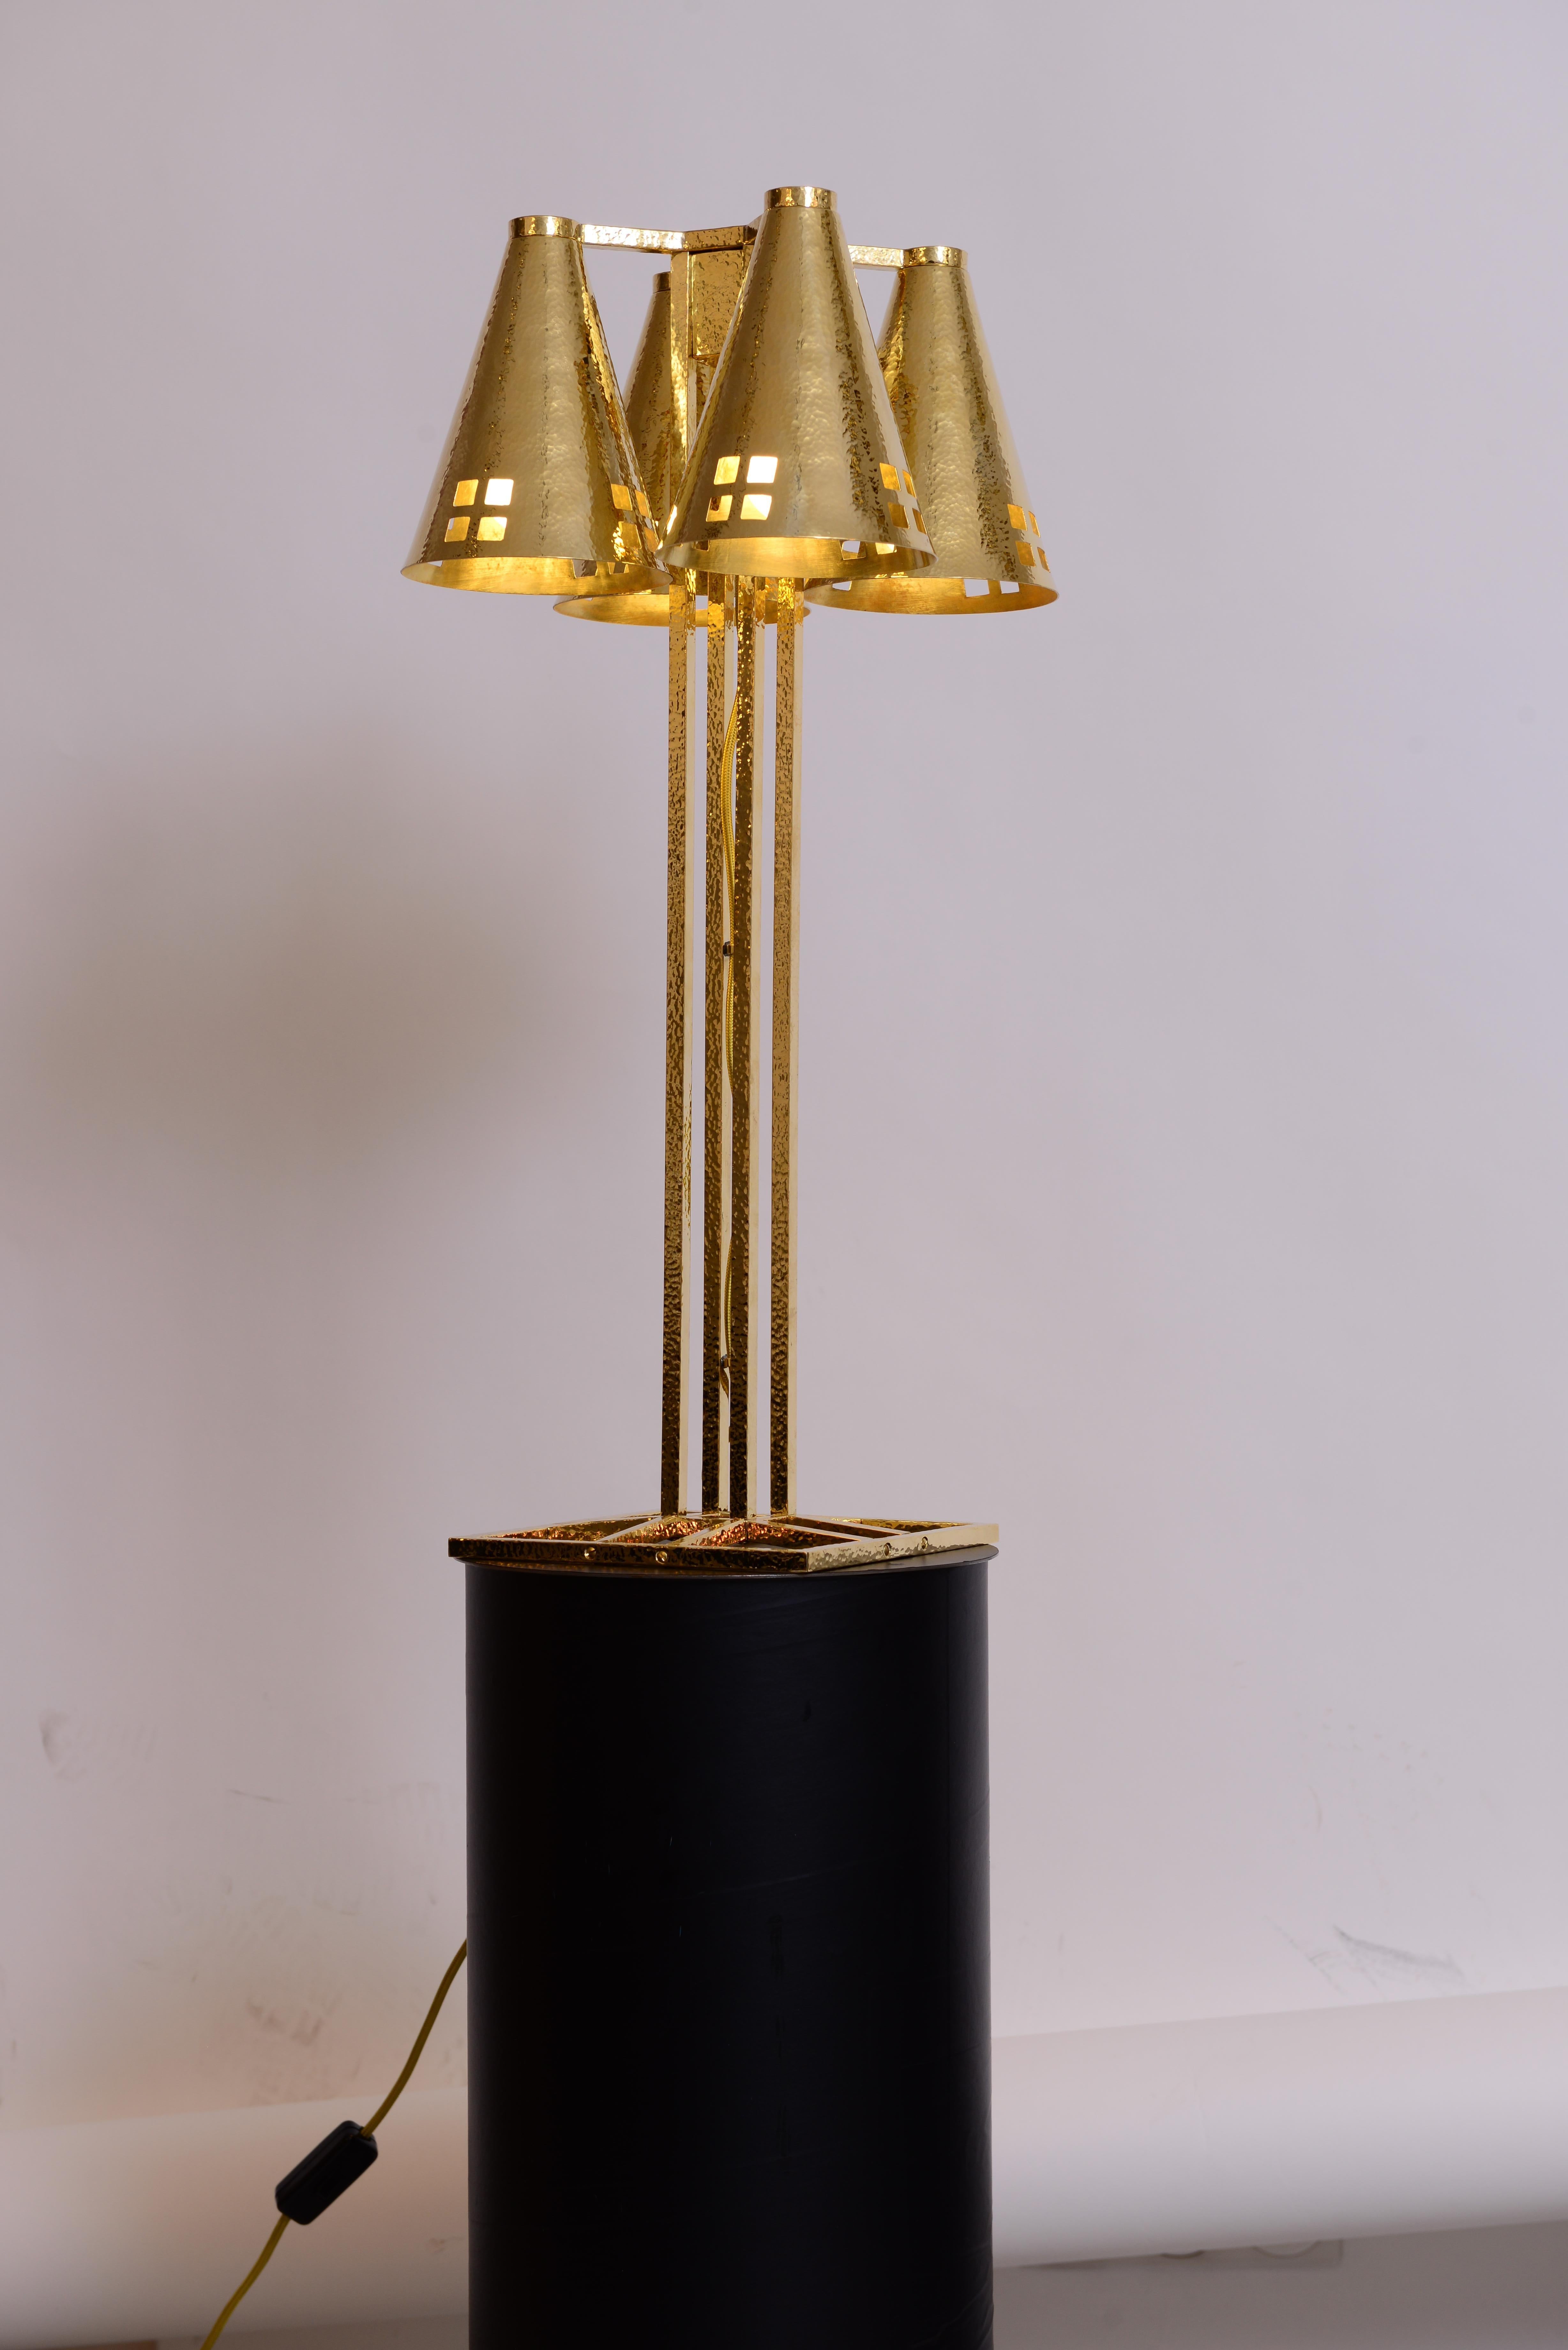 Austrian Cubistic Josef Hoffmann / Wiener Werkstätte Table Lamp, Re Edition For Sale